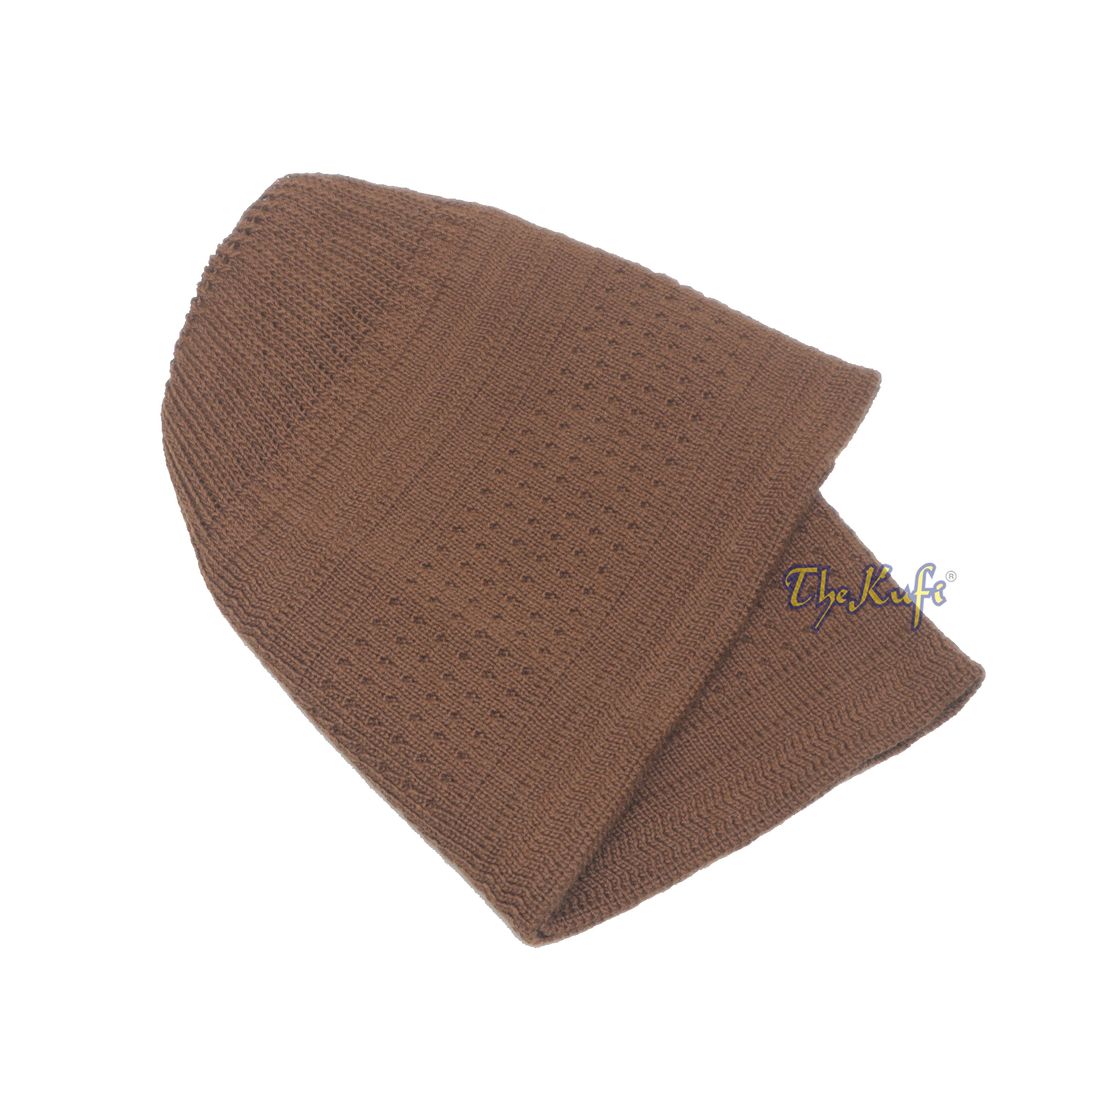 Brown Cotton Stretch-knit Kufi Prayer Cap Double Layer Woven Design Hat